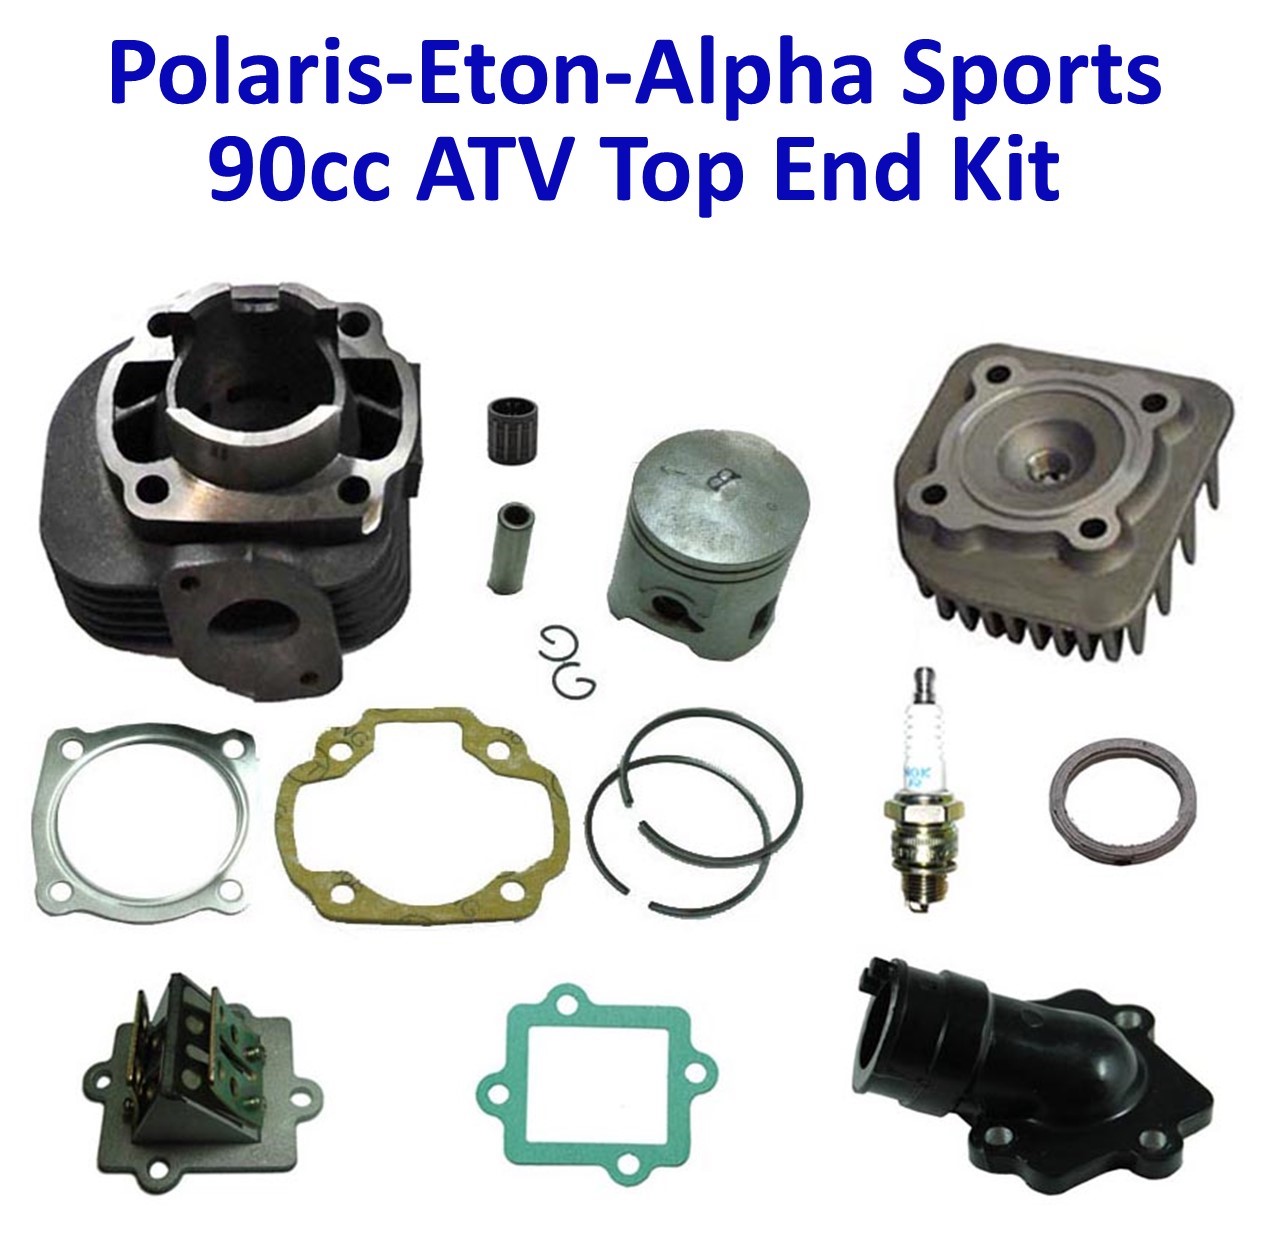 Polaris-Eton-Alpha Sports 90cc 2 Stroke Top End Cylinder Kit - Click Image to Close